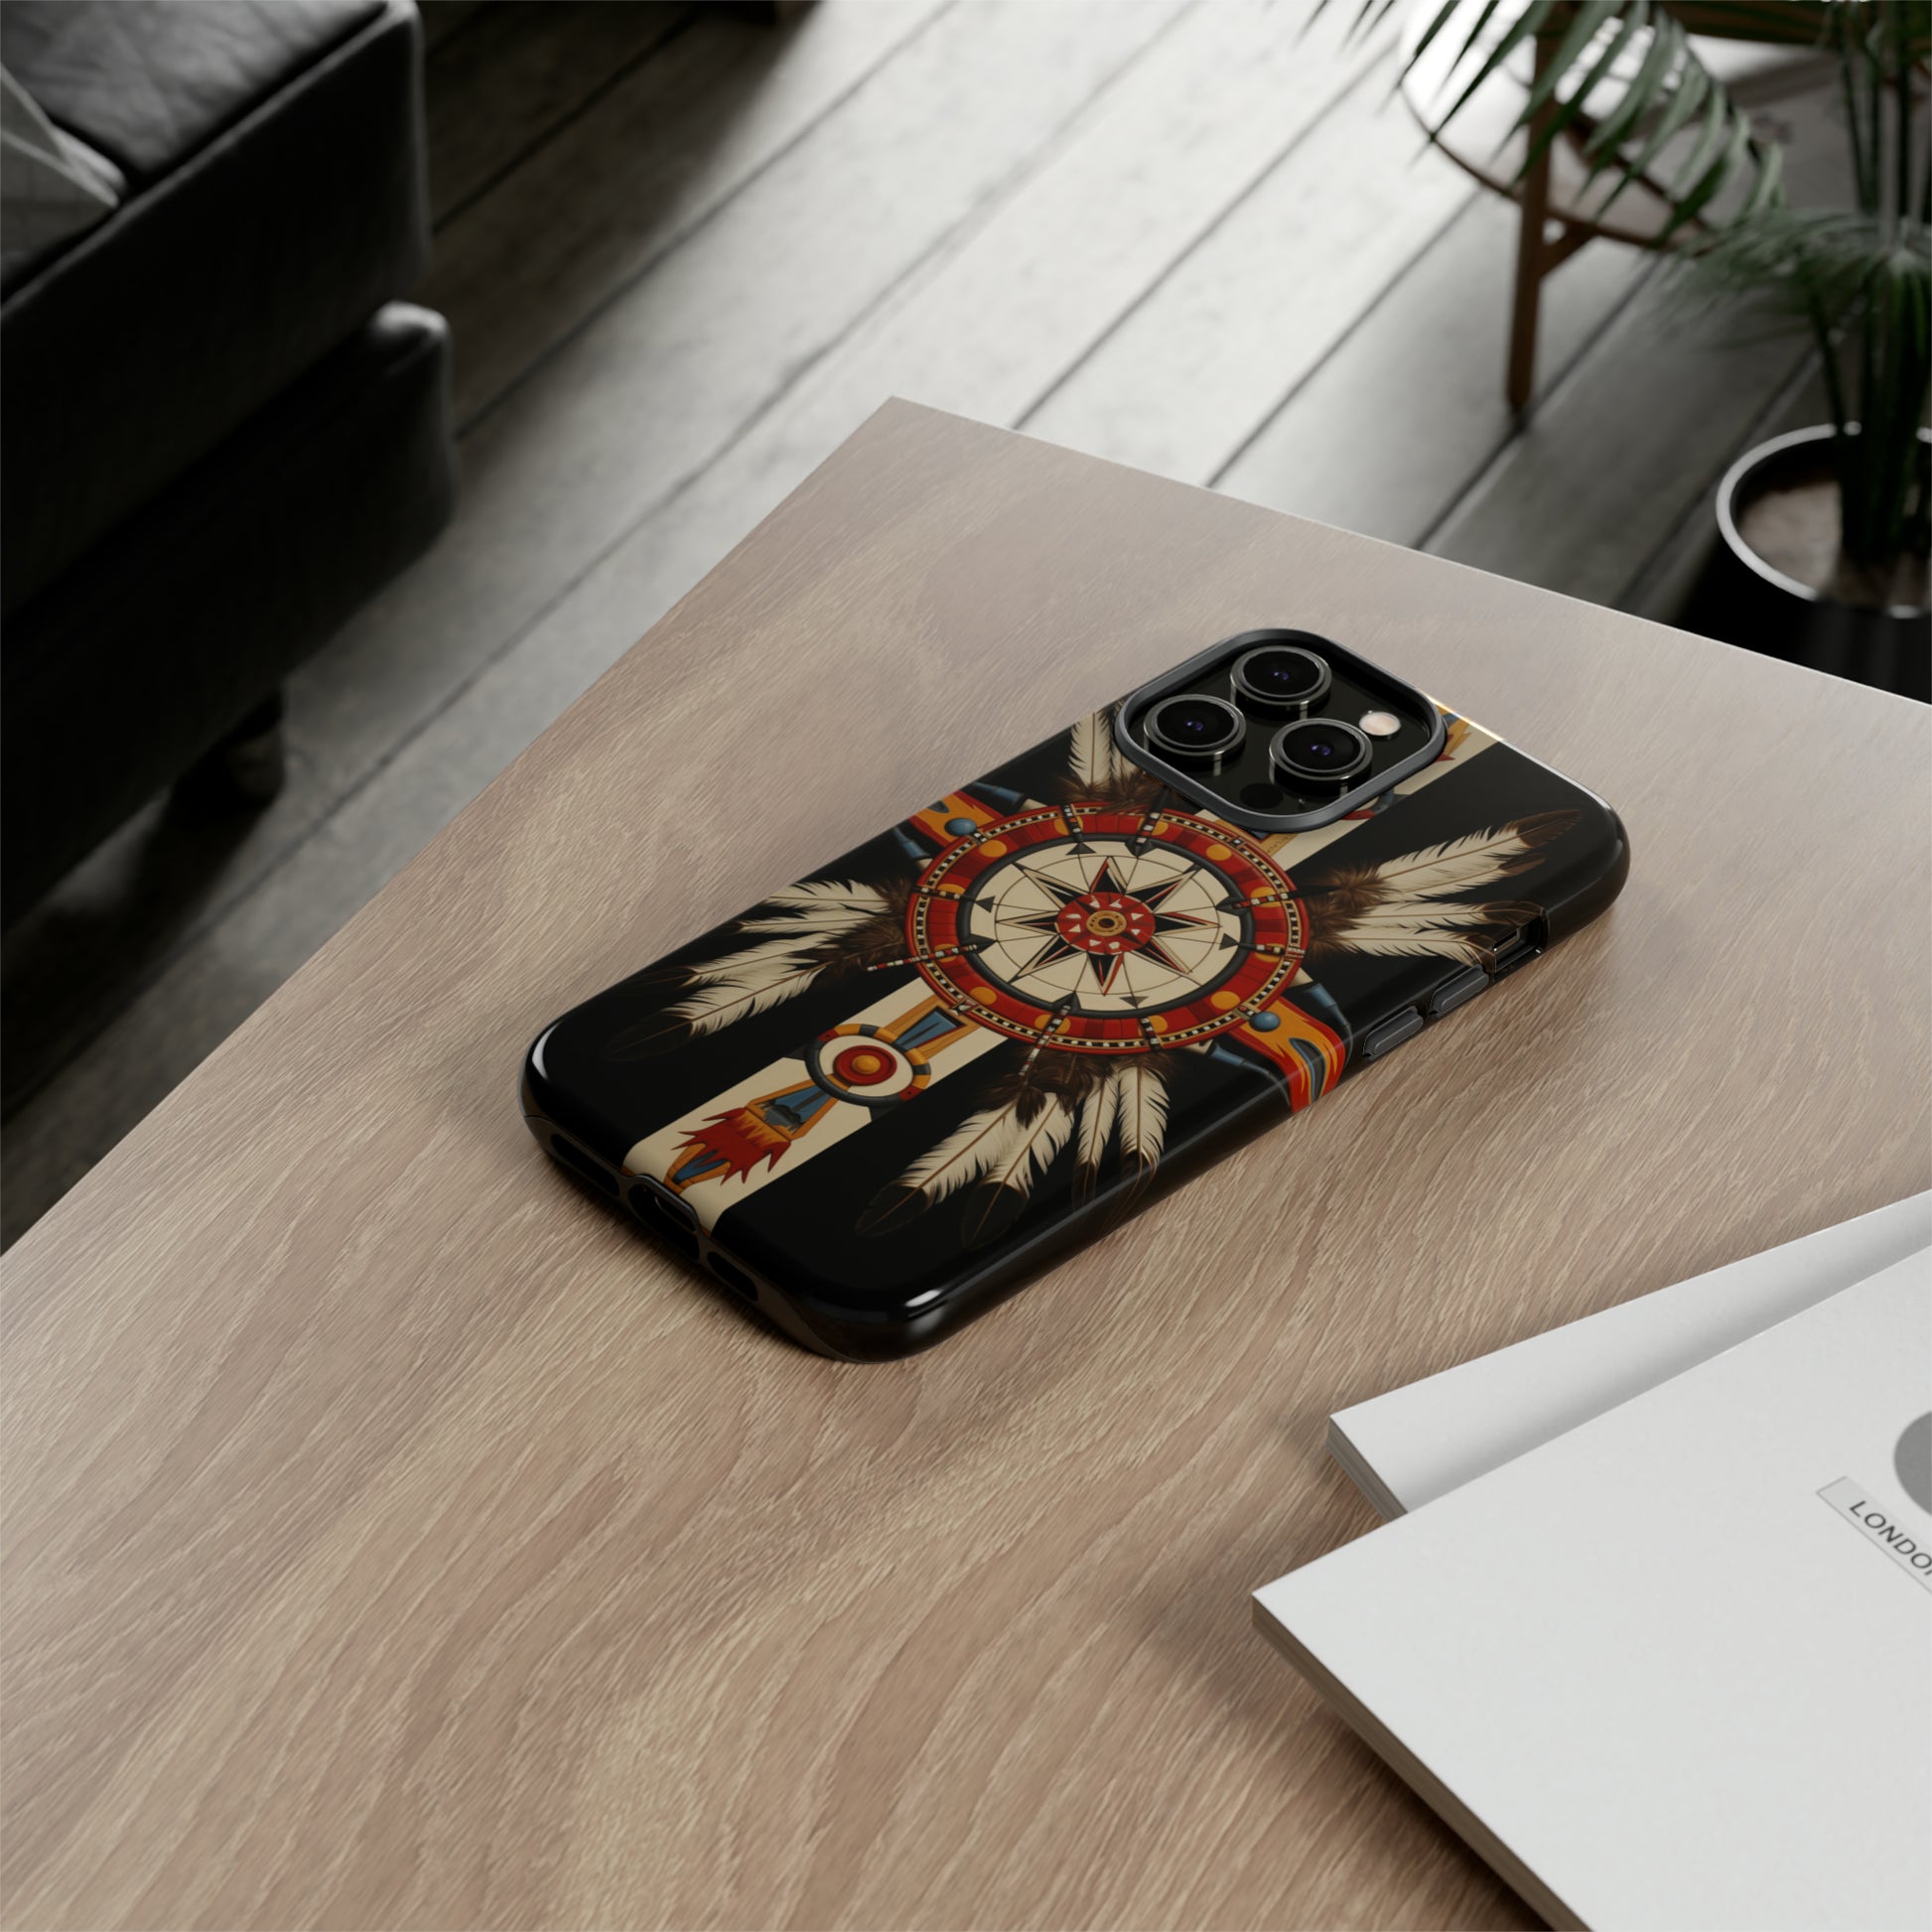 Artistic Navajo wheel design on iPhone case